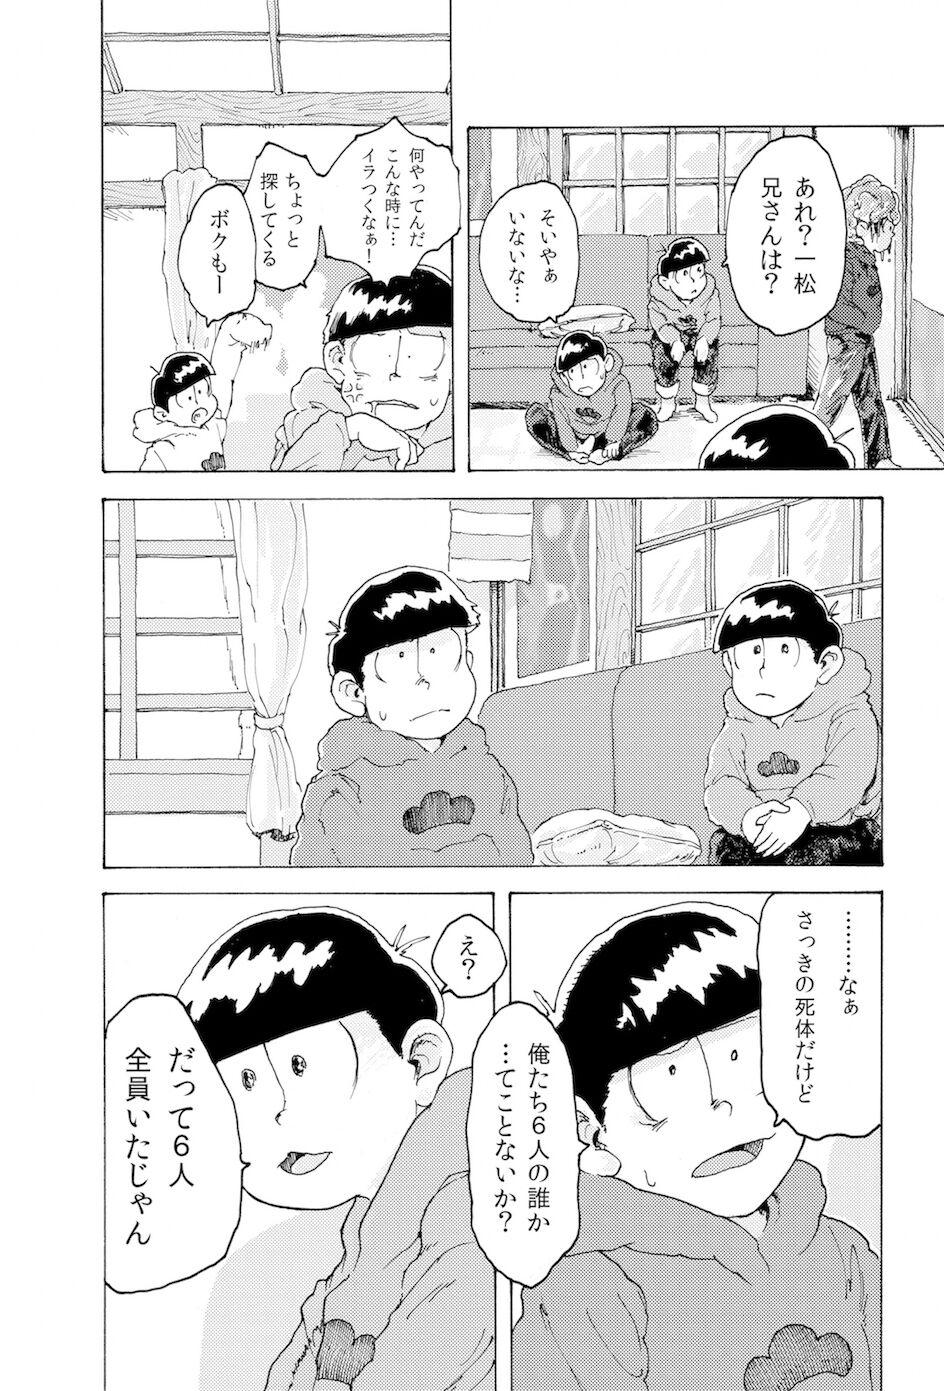 Follando [Koshigerunasunibusu] WEB Sairoku [R18G] 'AIN'T SIX IS DEATH' - Osomatsu-san Long - Page 11